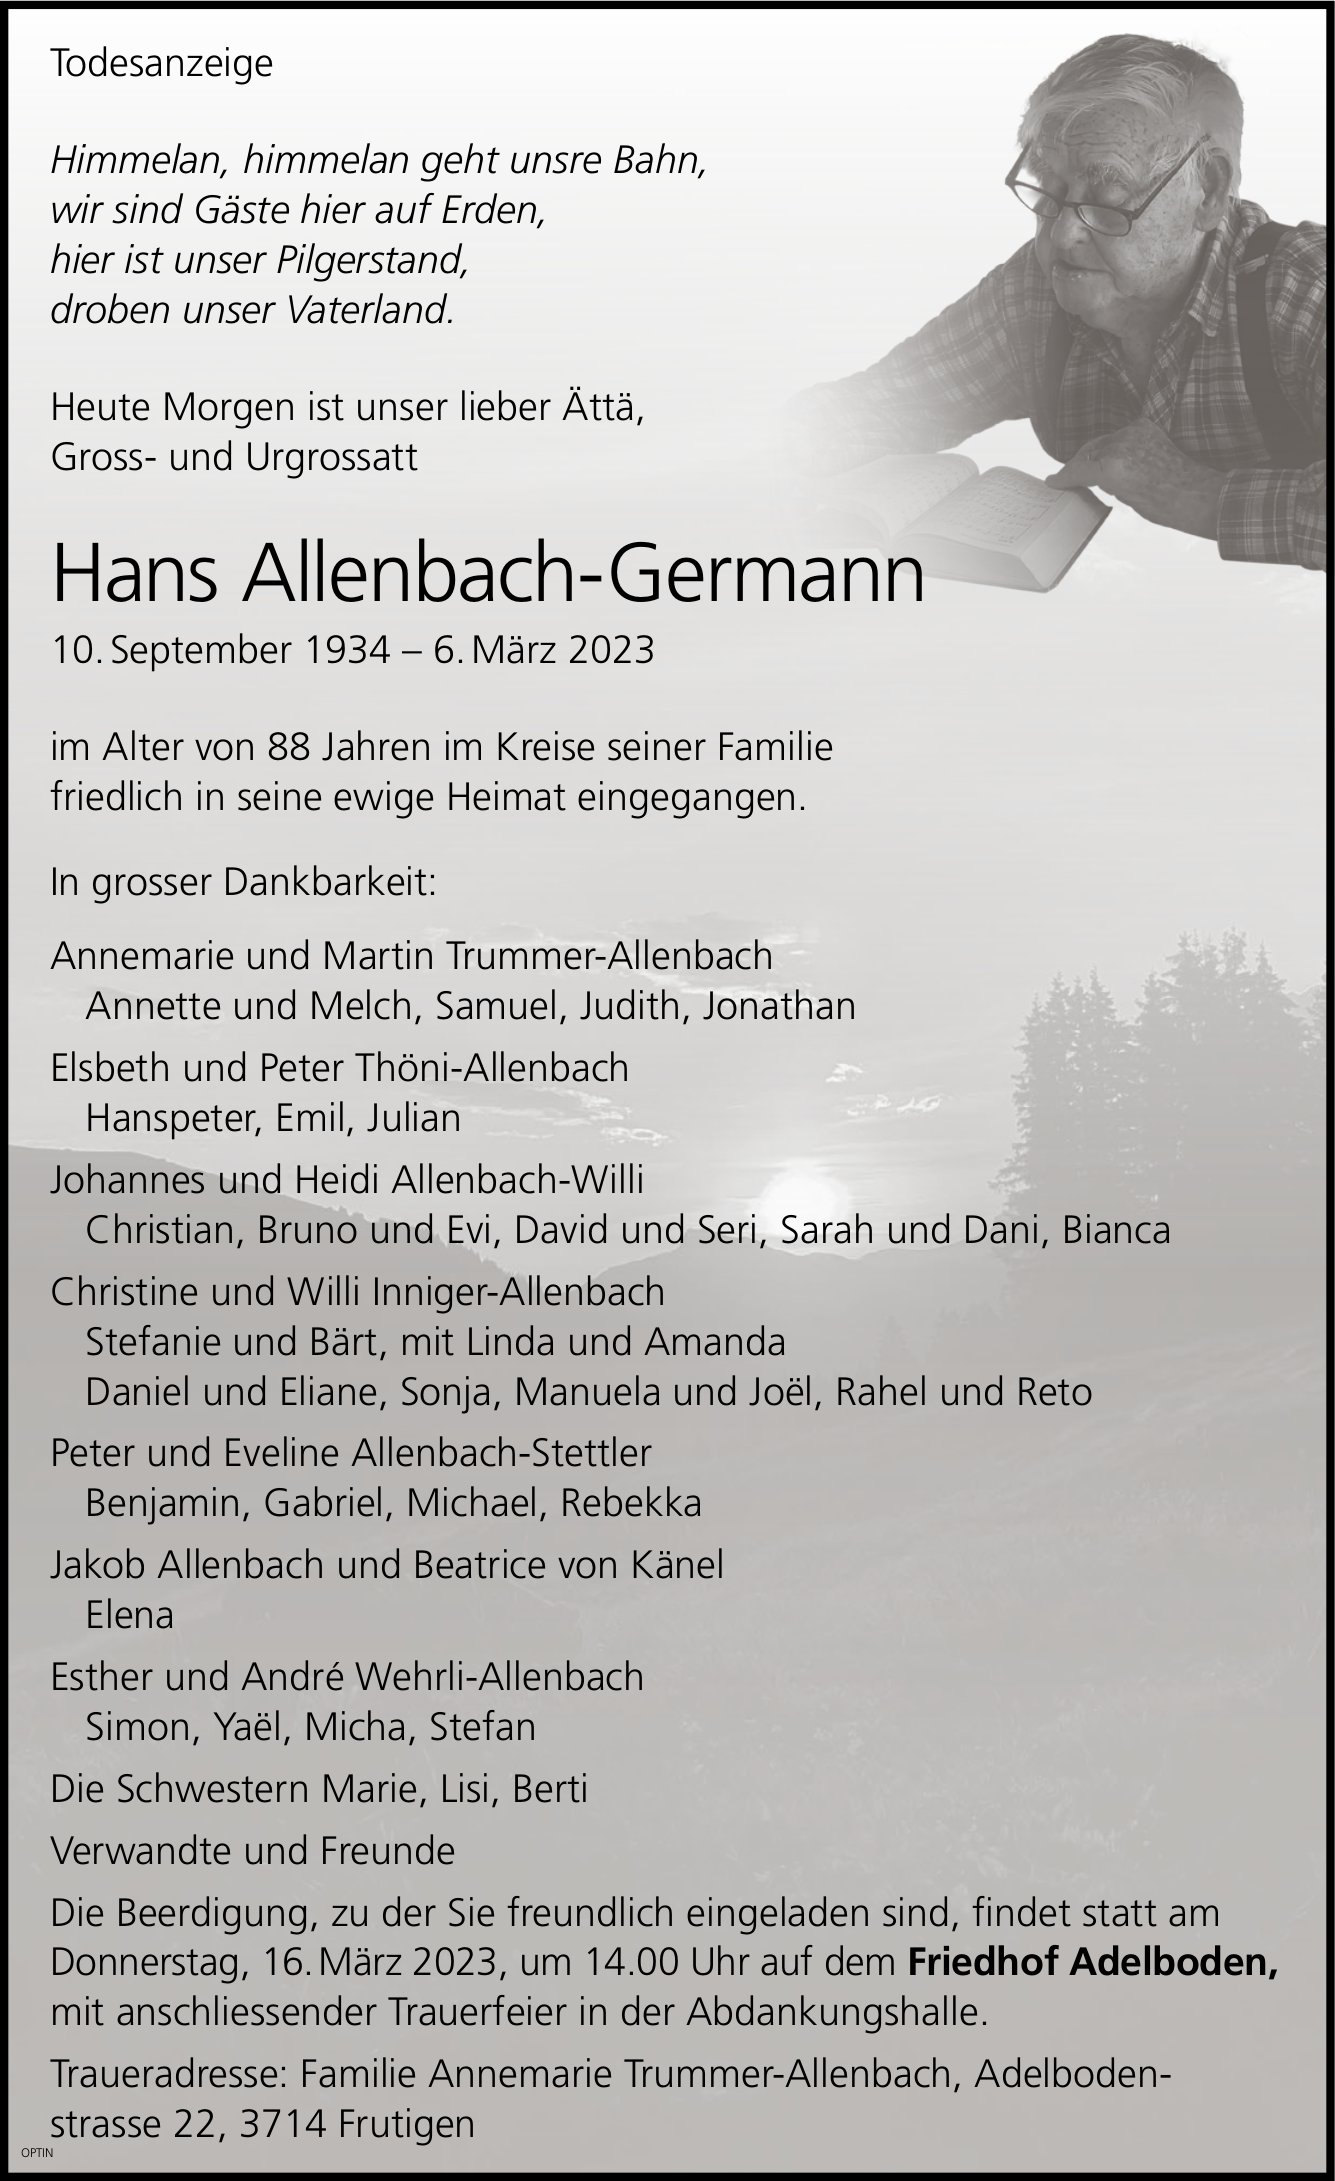 Hans Allenbach-Germann, März 2023 / TA